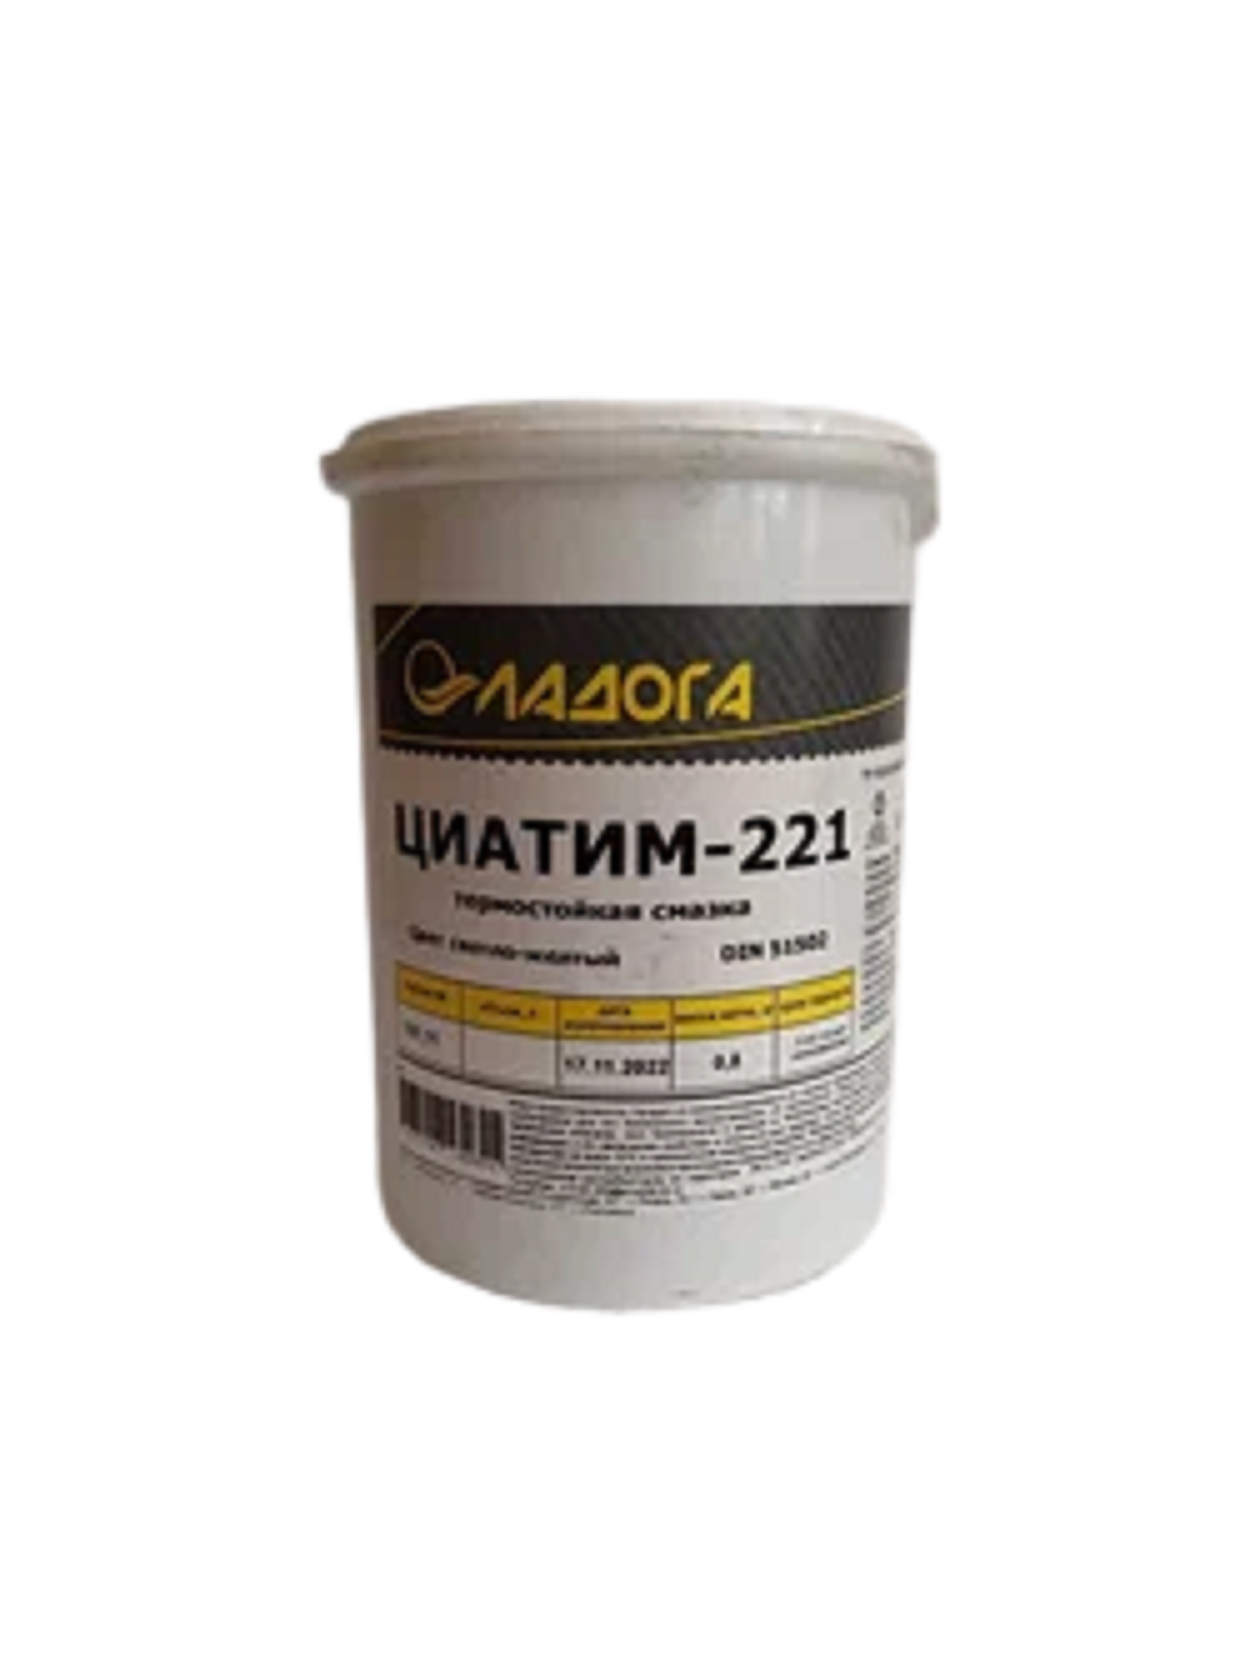 Смазка Ладога Циатим-221 0,8 кг смазка ладога литол 24 0 8 кг